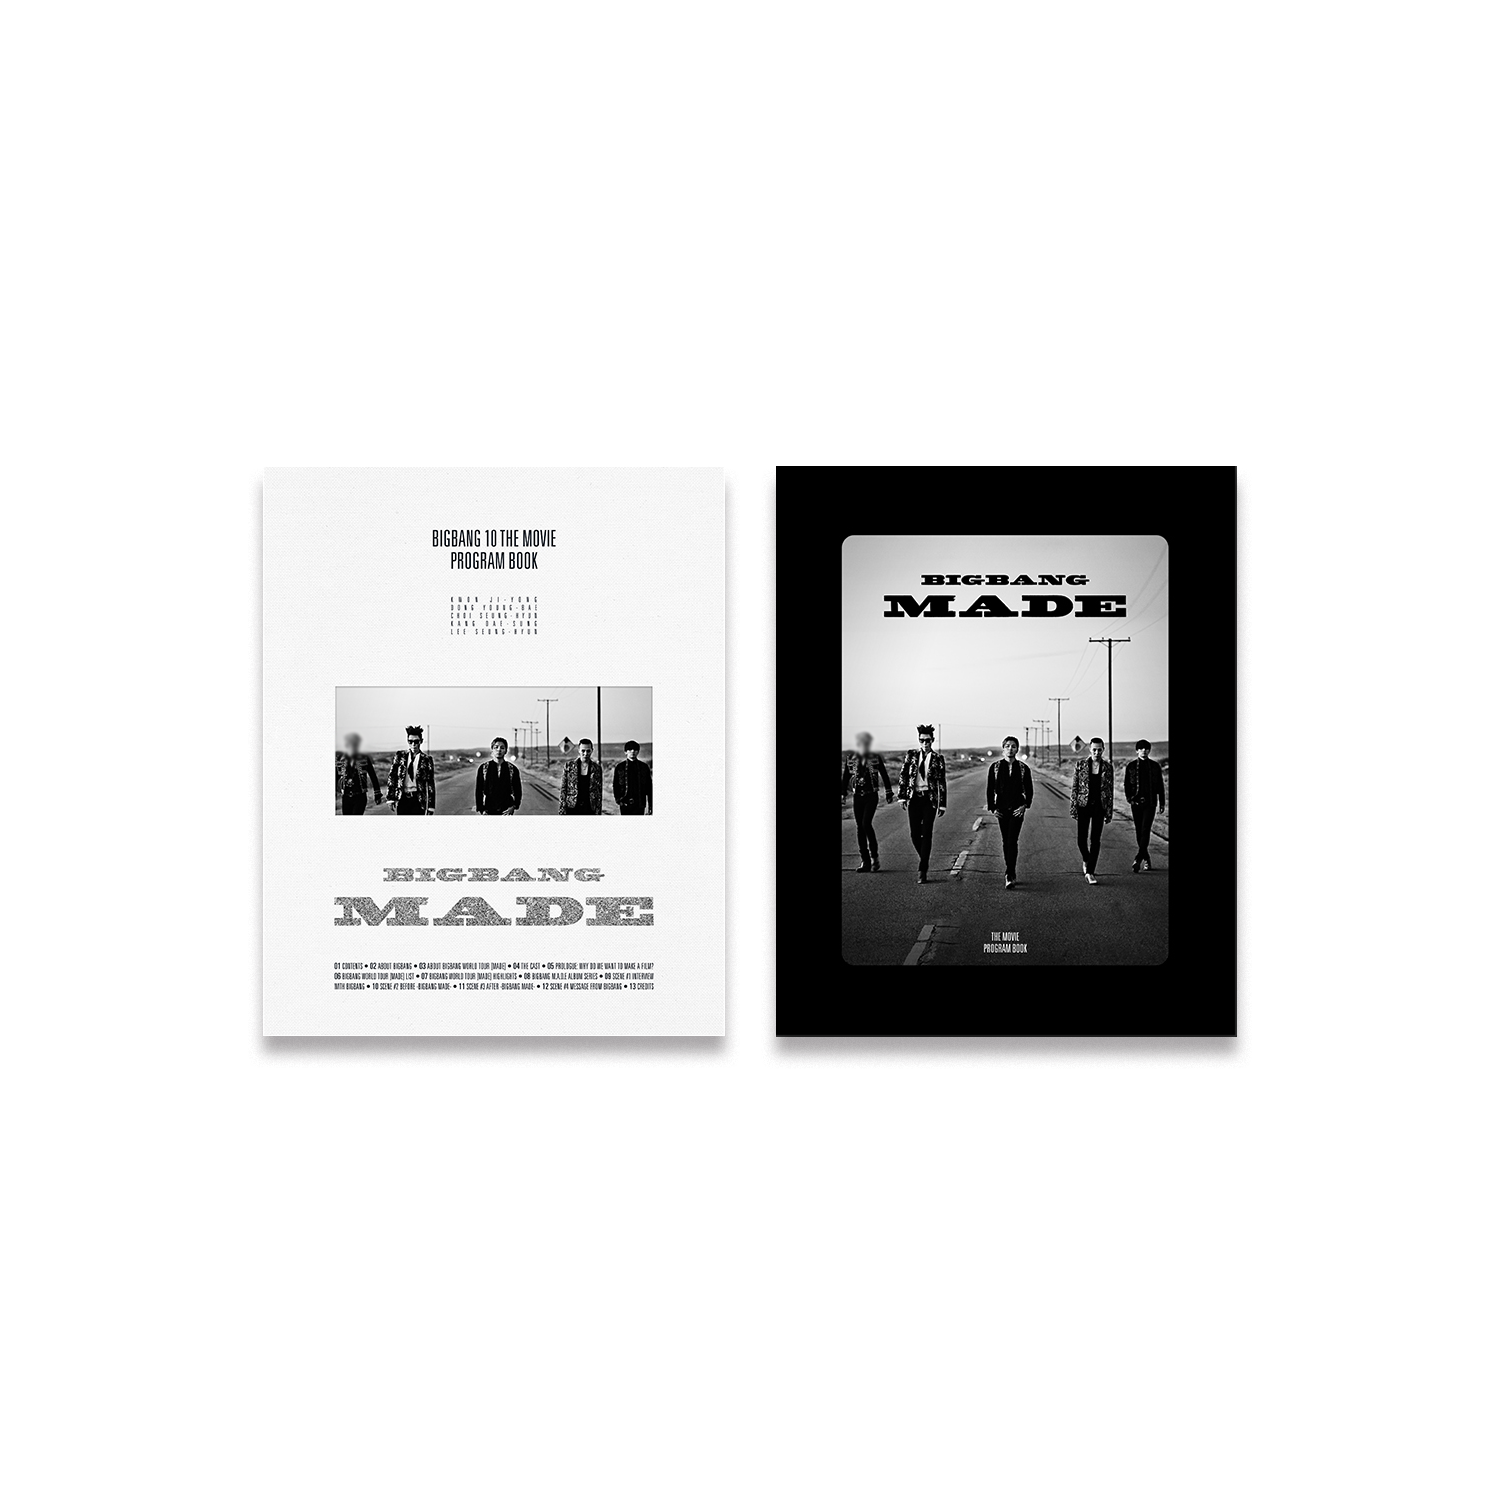 BIGBANG10 THE MOVIE ‘BIGBANG MADE’ PROGRAM BOOK